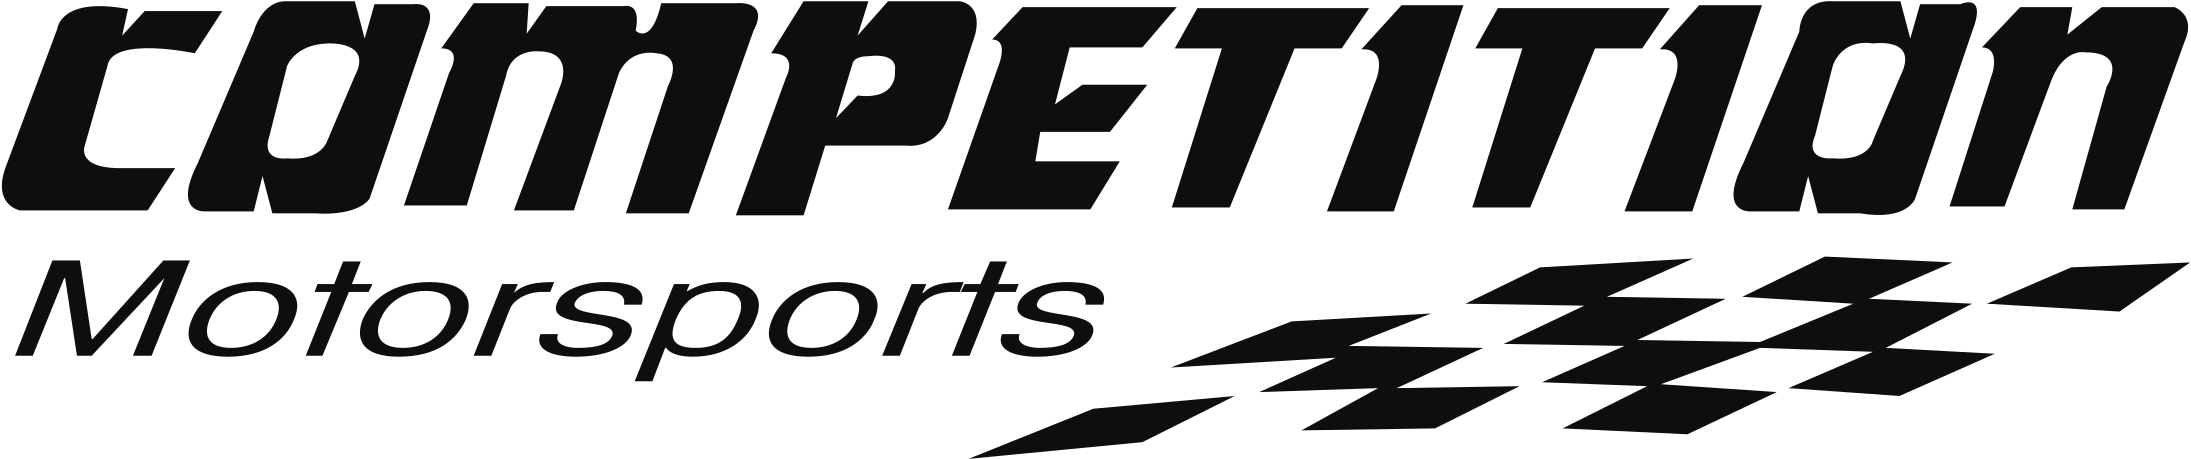 Competition Motorsports Logo Png Transparent - Spirit Of Competition Logo (2400x2400), Png Download